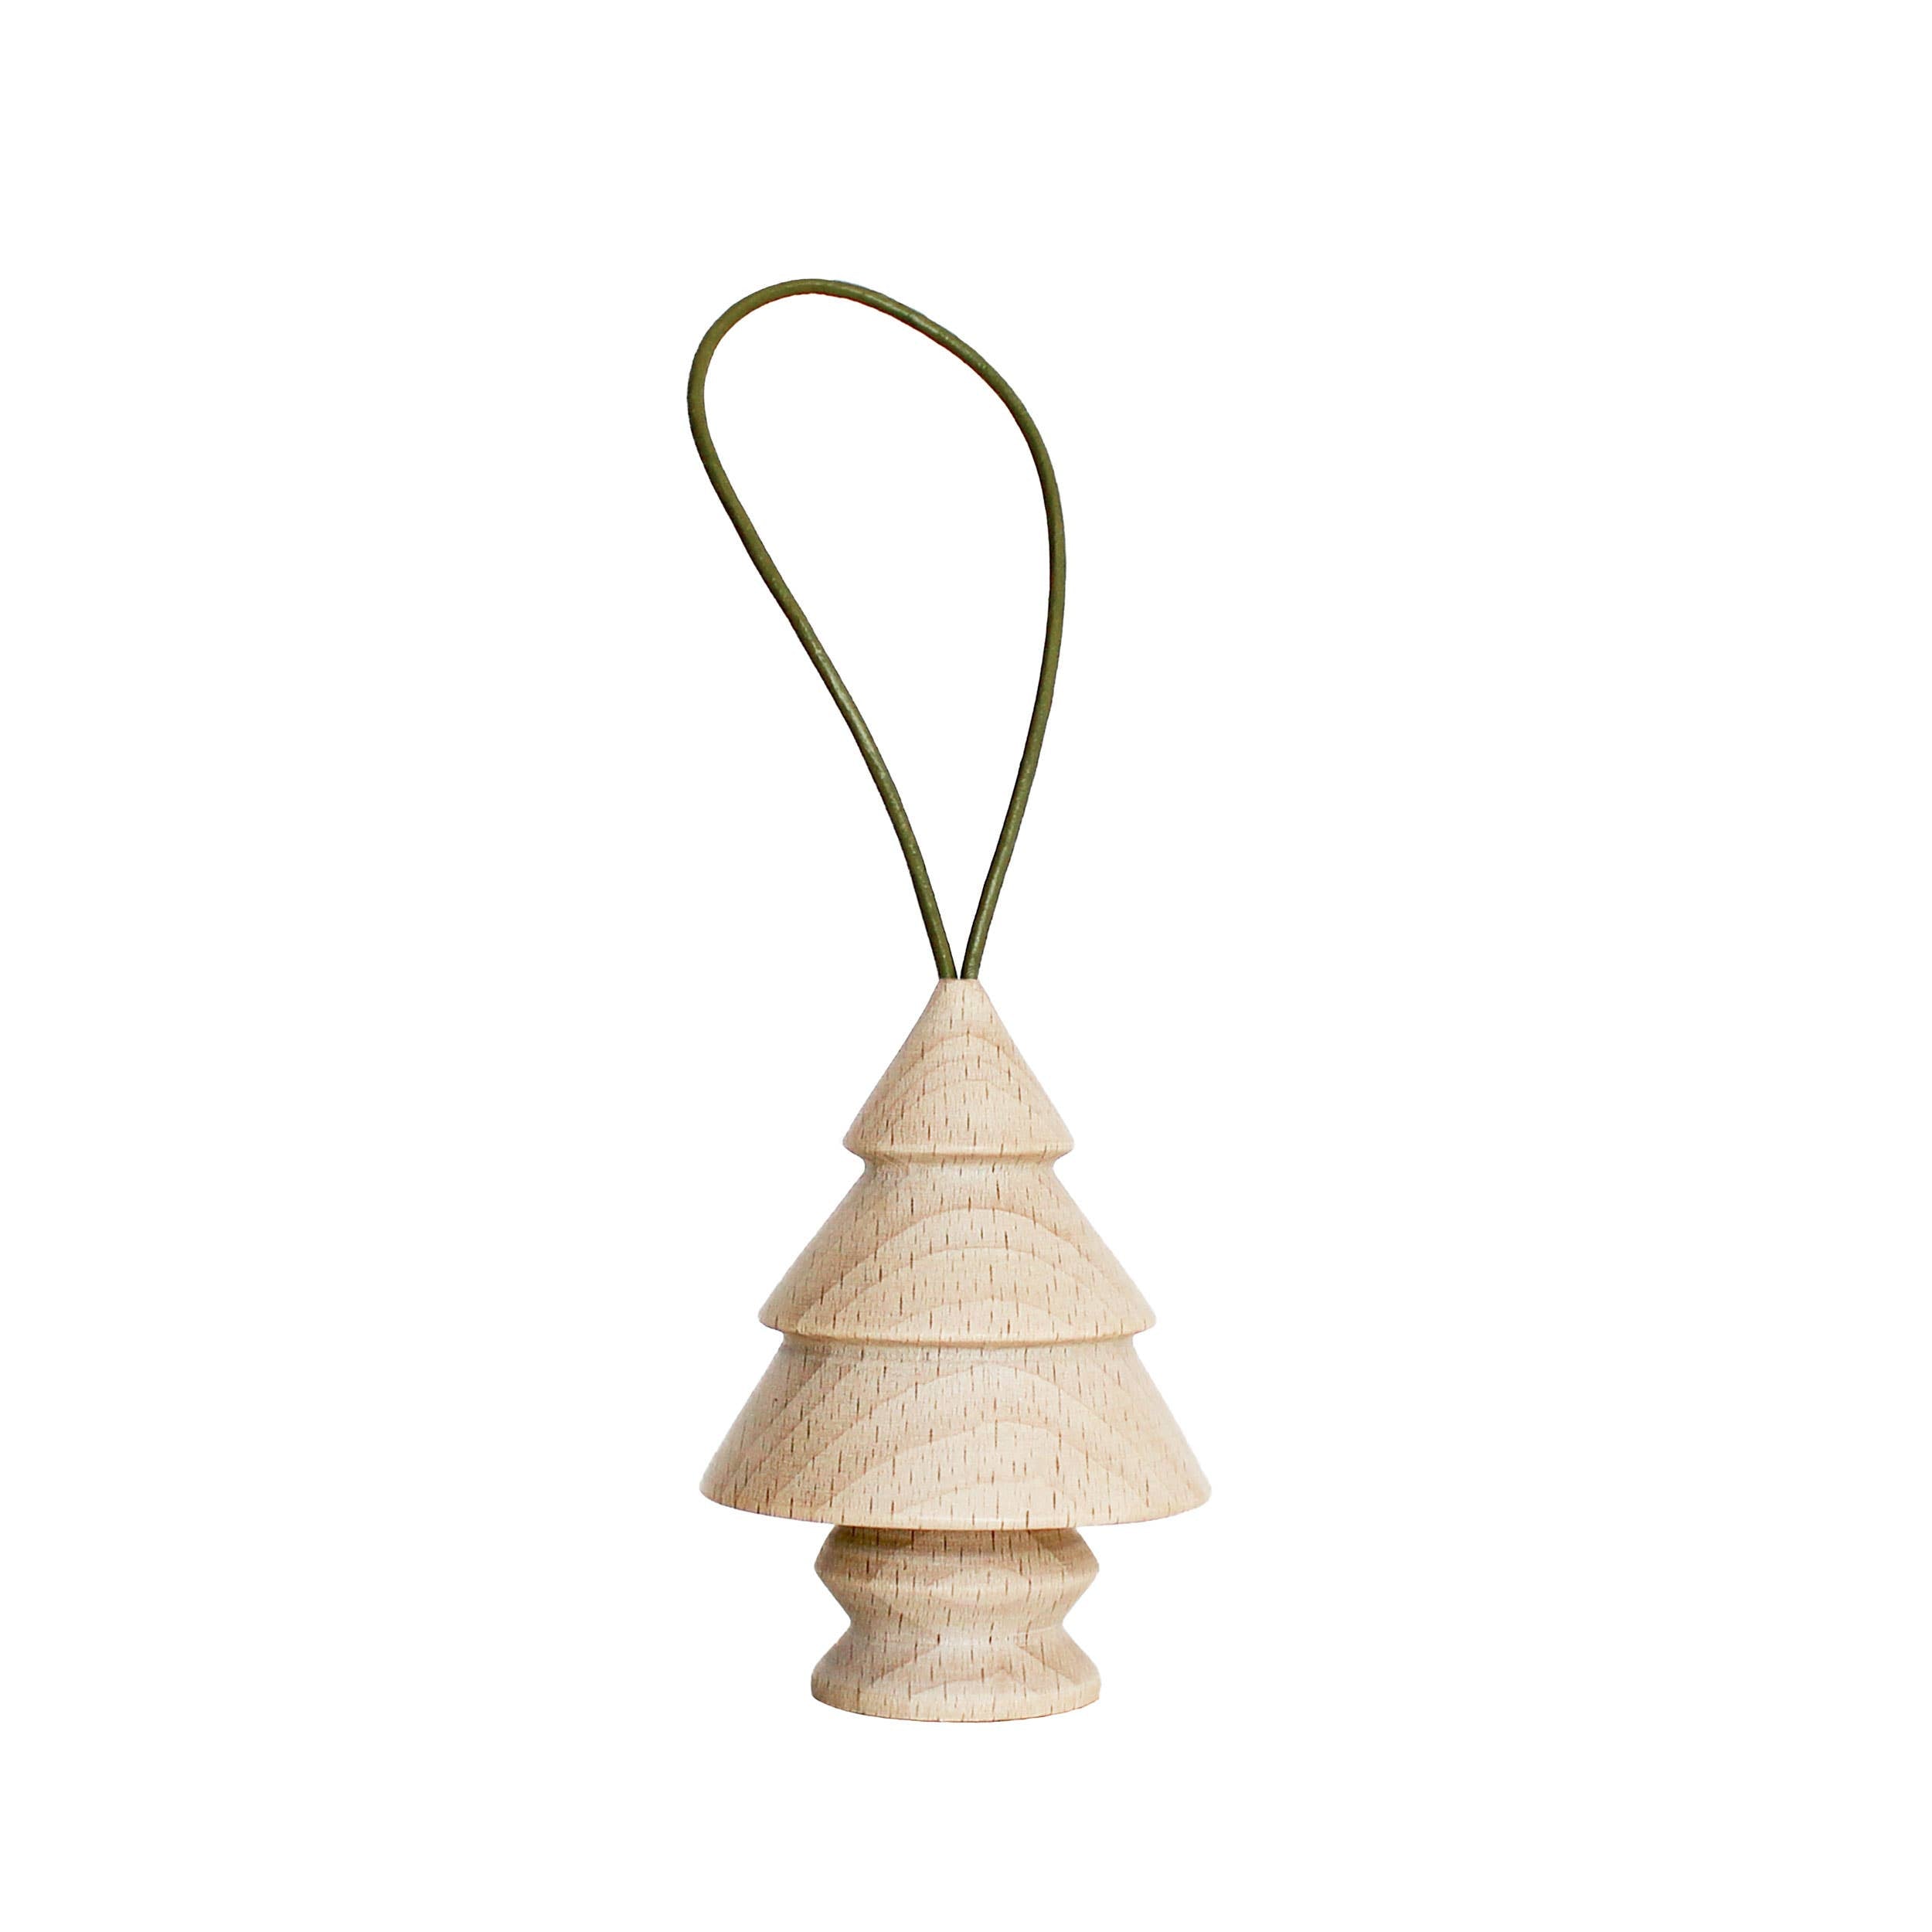 Wooden Christmas Tree / Bauble / Ornament / Hanger - Nr. 6